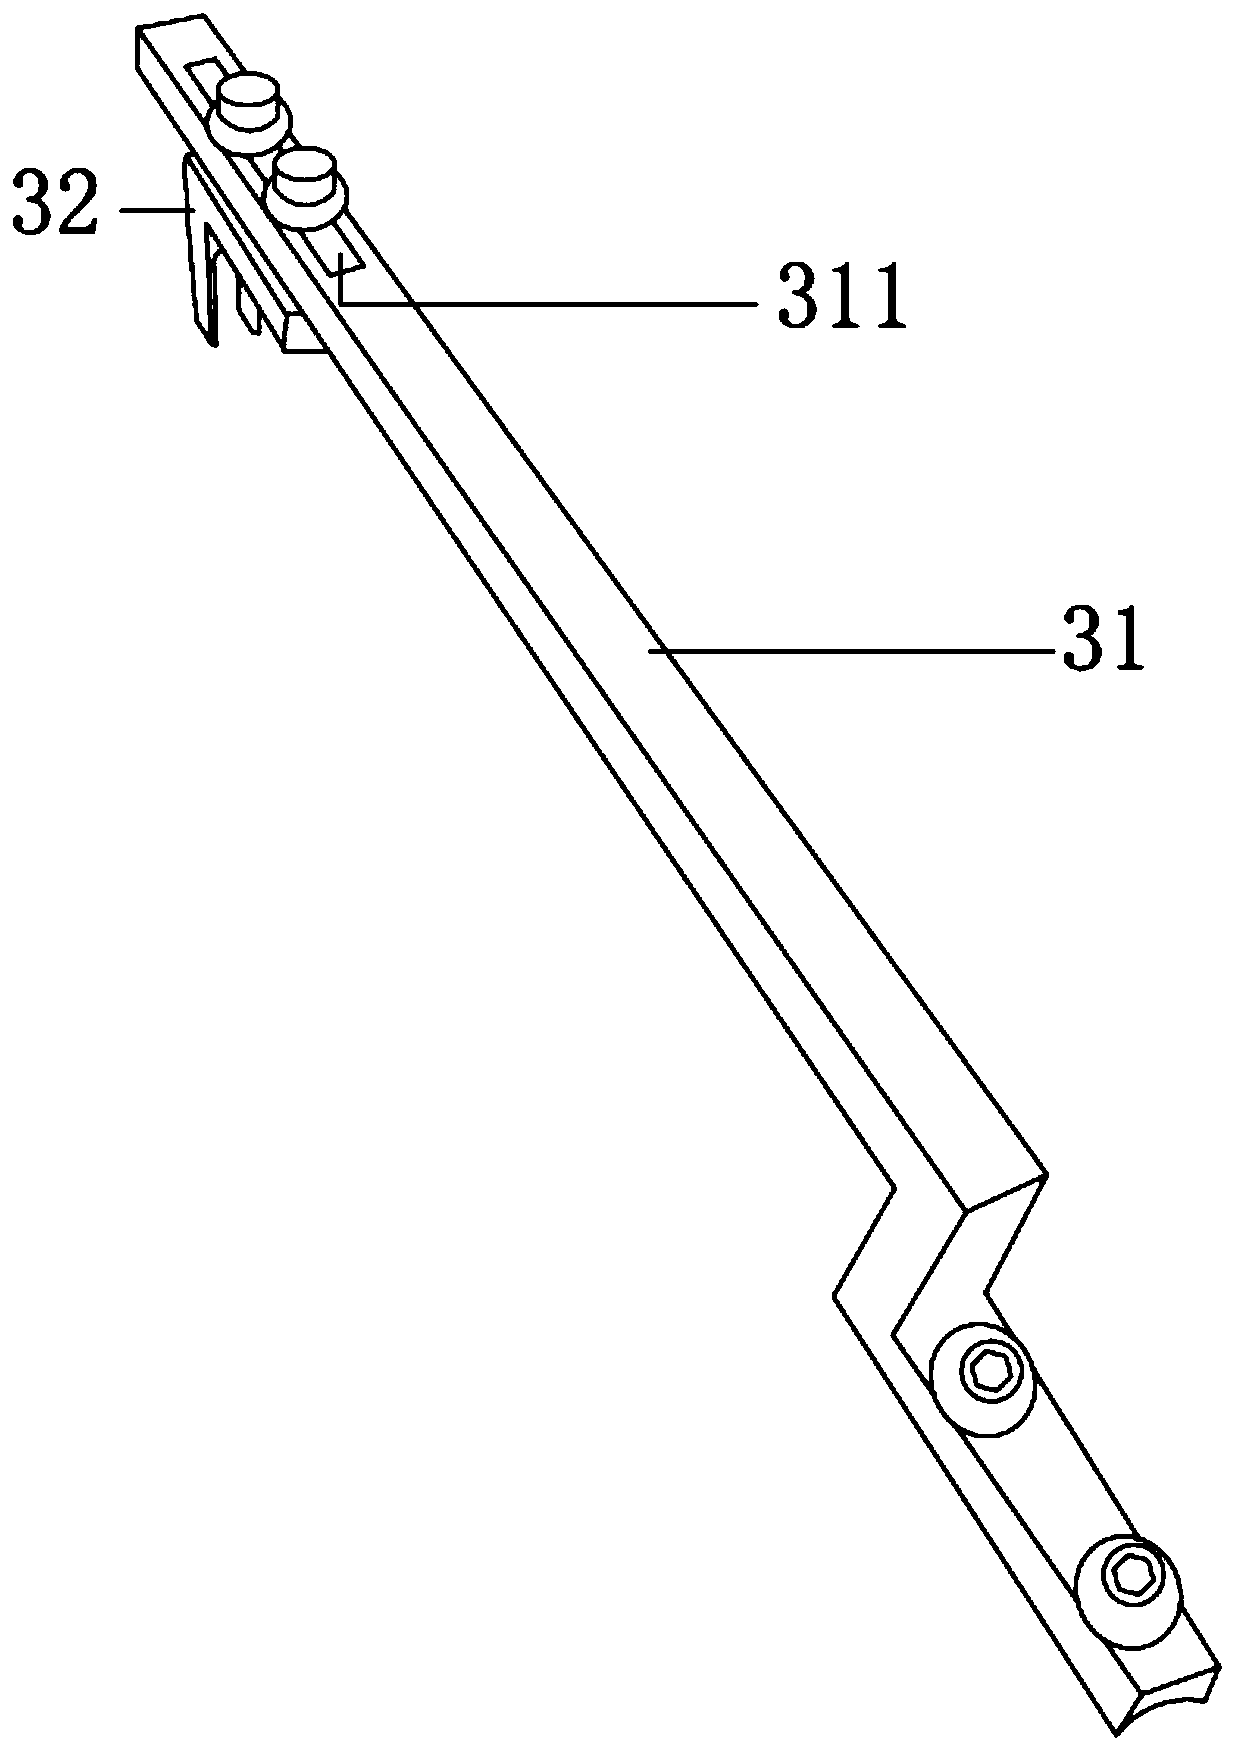 Automatic feeding device for screw rod machining